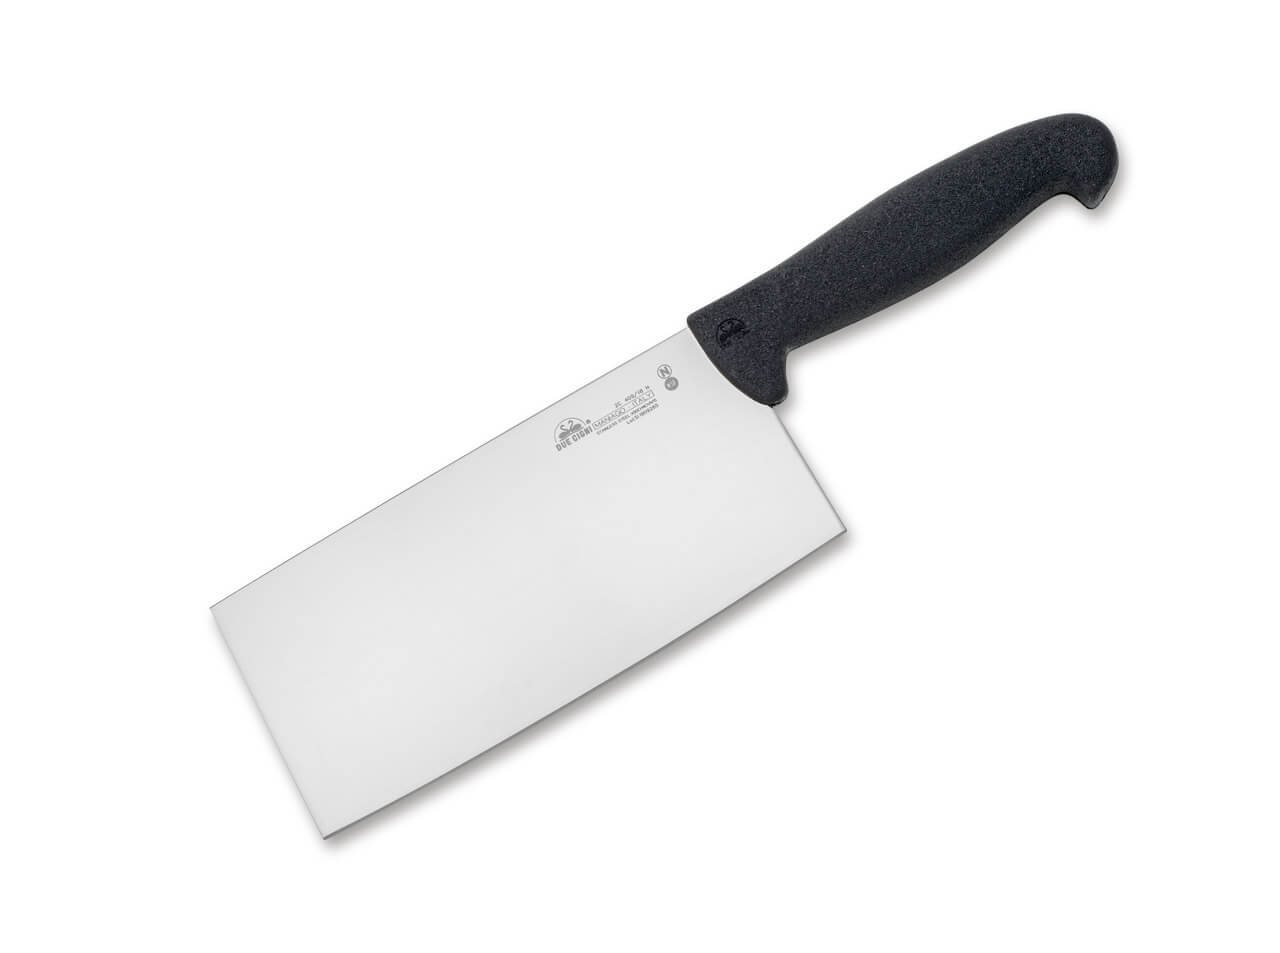 https://www.bokerusa.com/media/image/ae/0d/86/due-cigni-chinese-chef-s-knife-nylon-03dc164.jpg